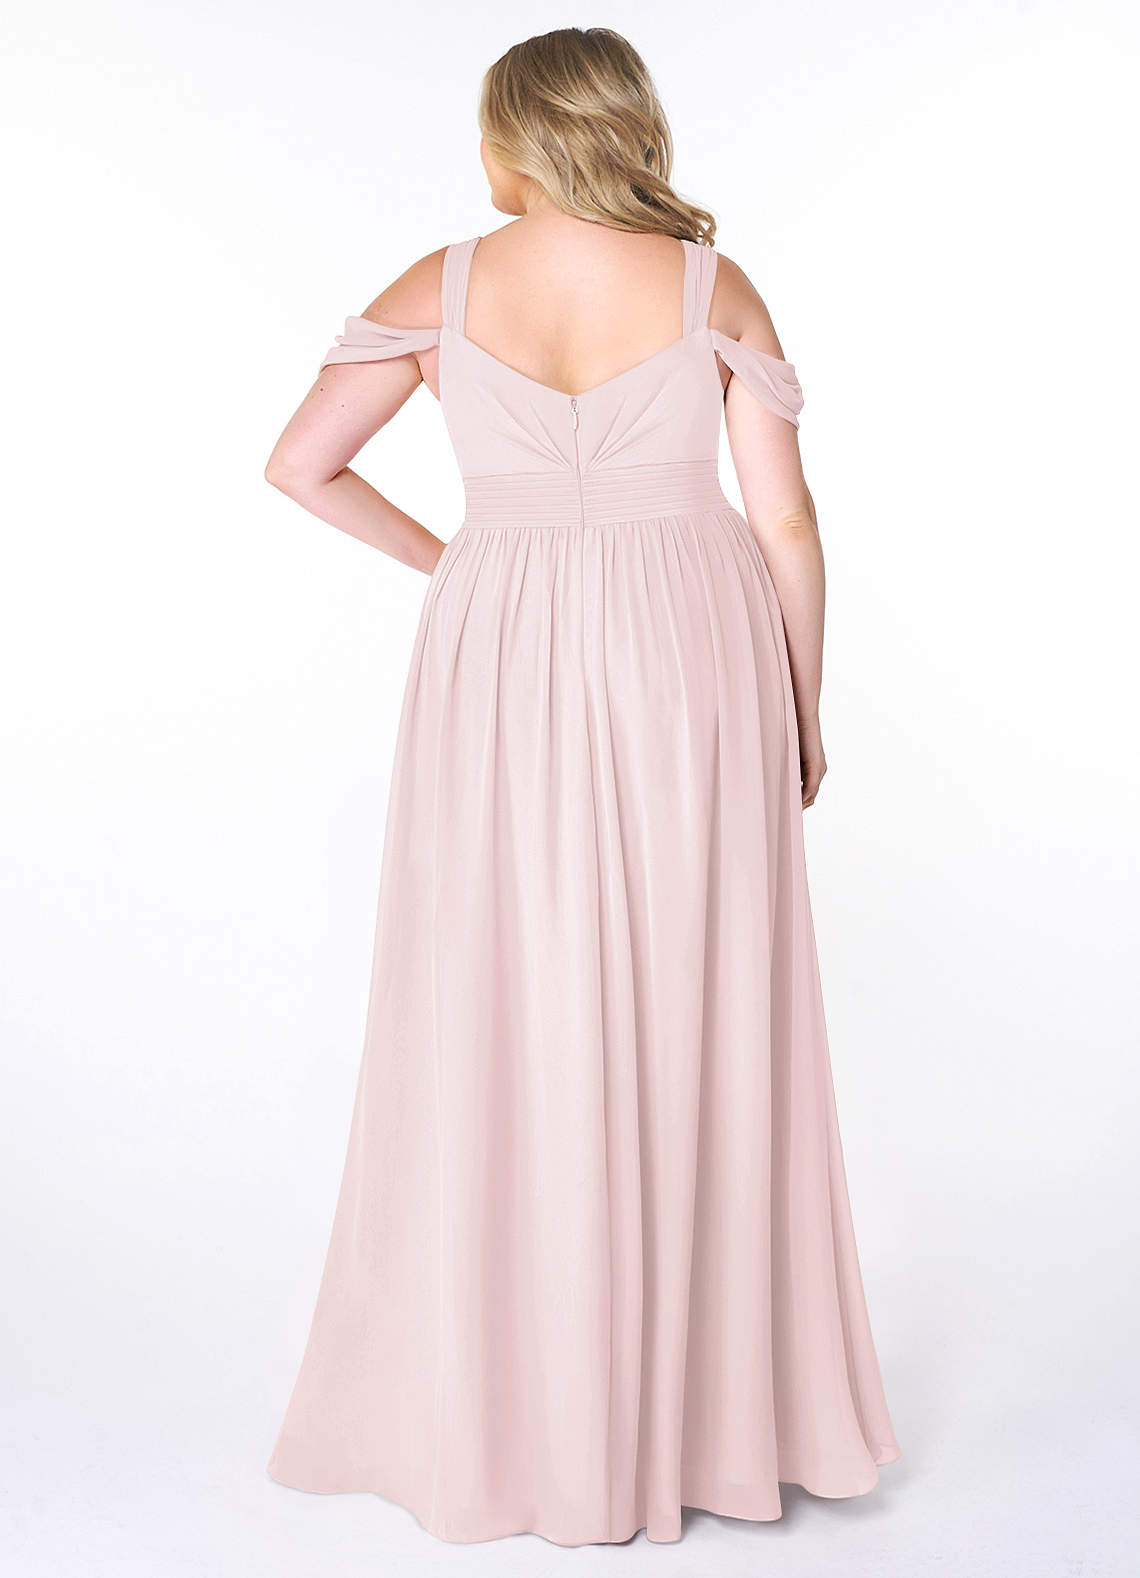 Azazie Lianne Bridesmaid Dresses A-Line Off the Shoulder Chiffon Floor-Length Dress image1